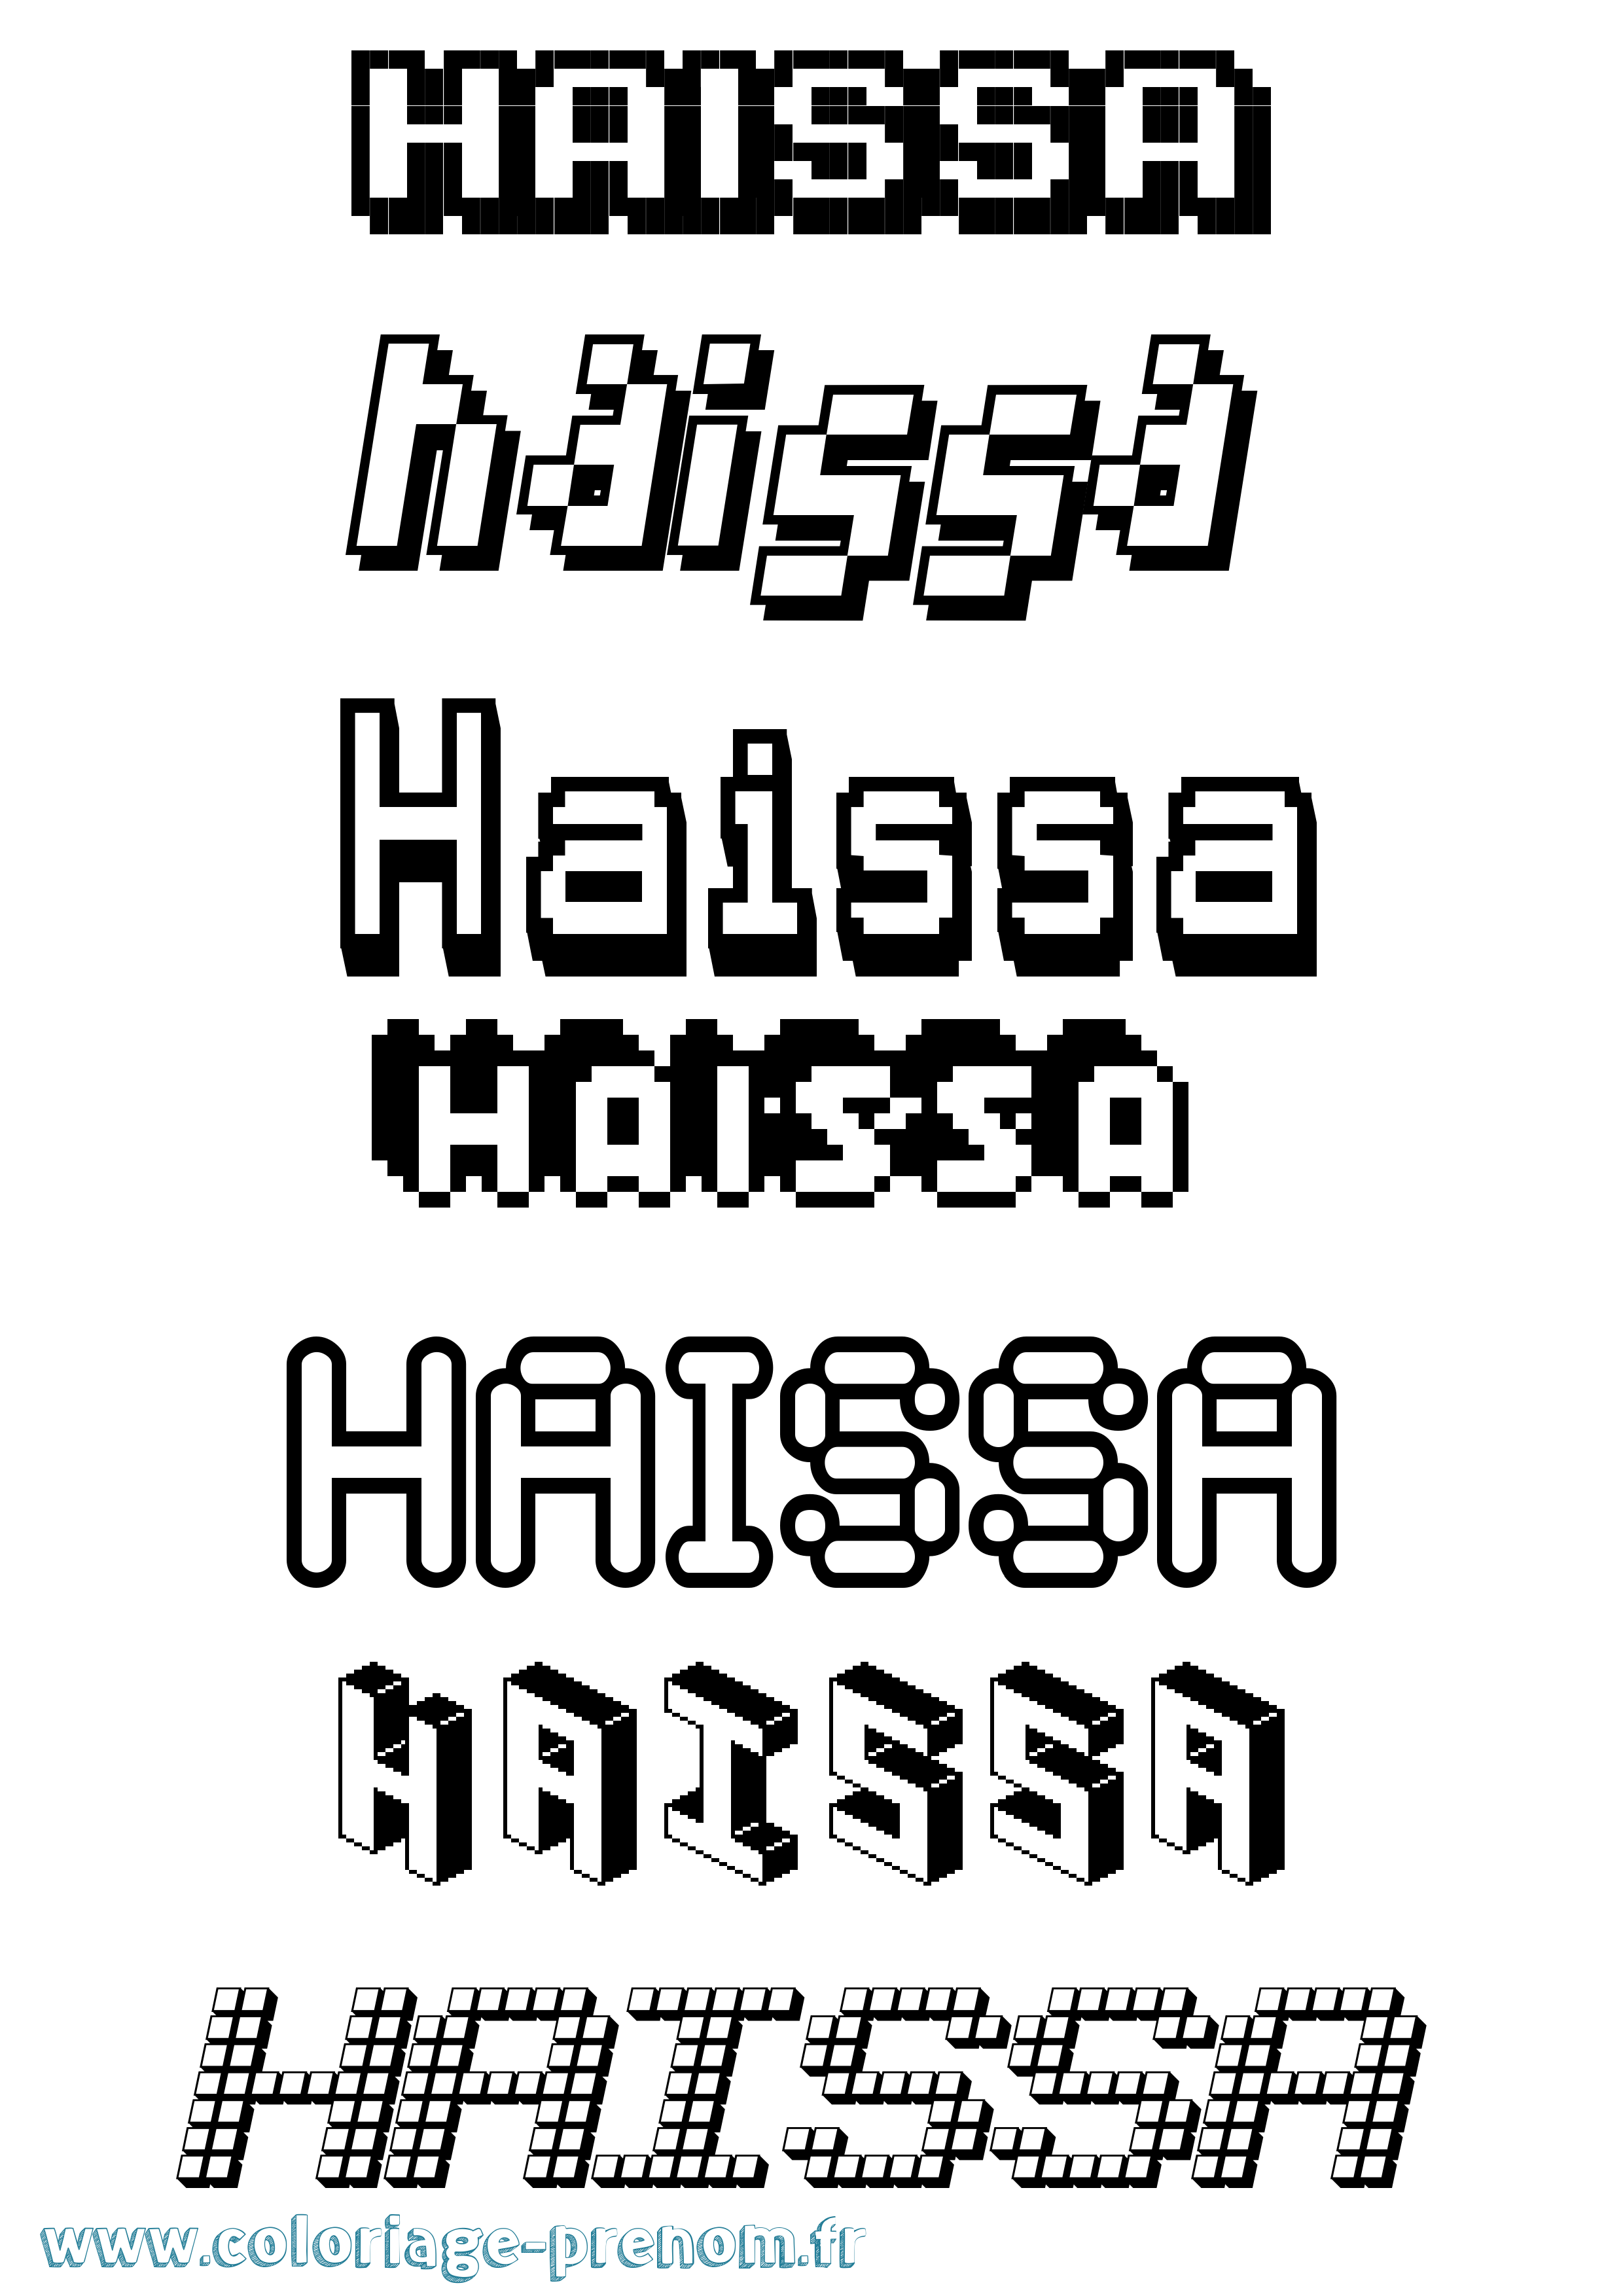 Coloriage prénom Haissa Pixel